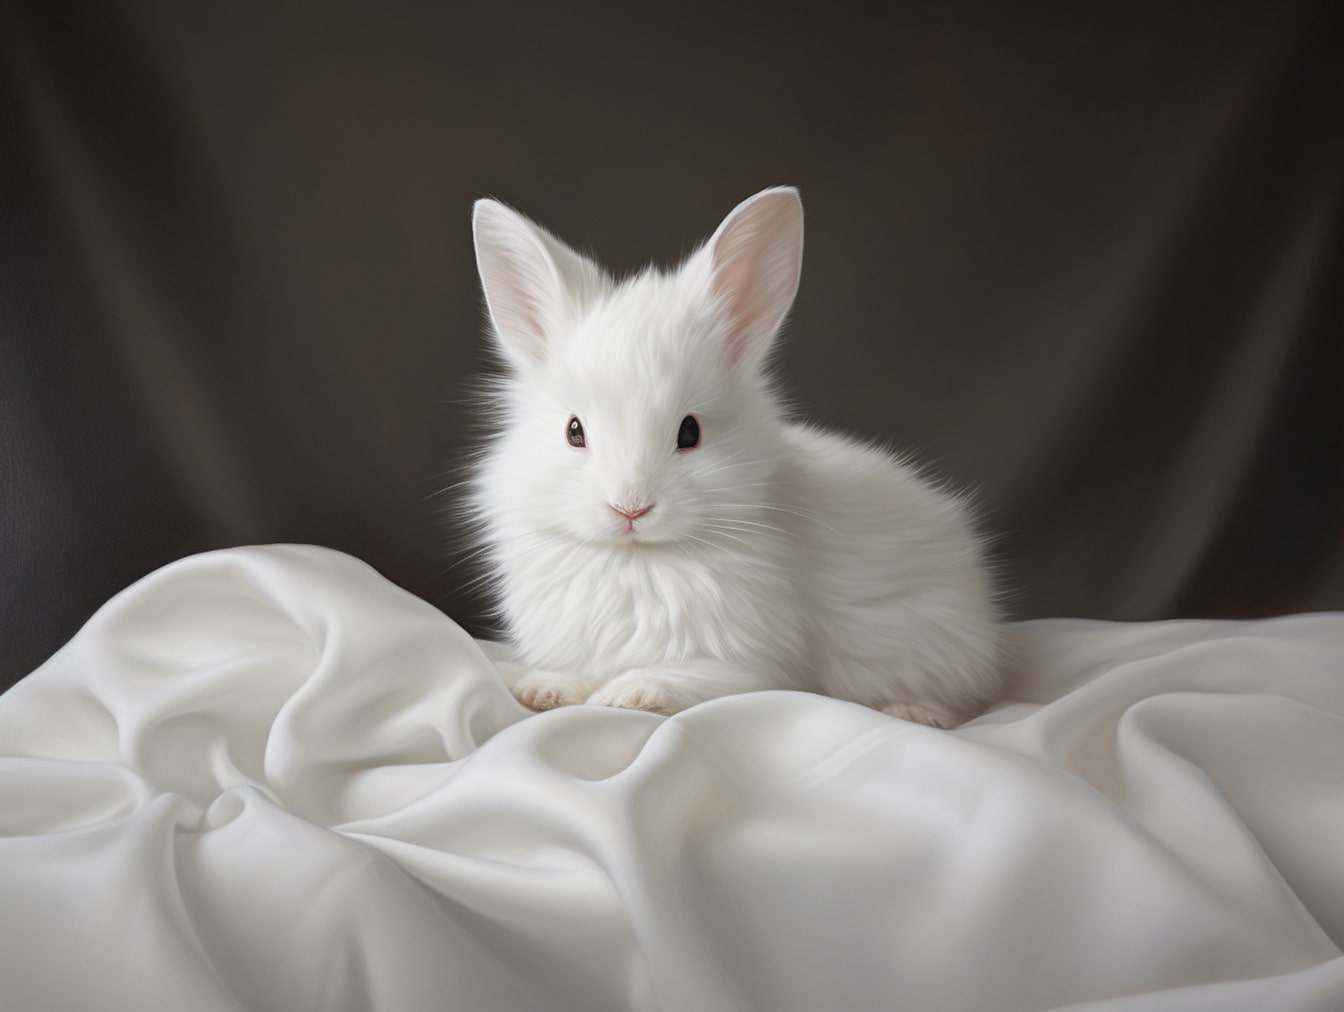 Majestuoso conejito blanco sobre lienzo de seda con fondo gris